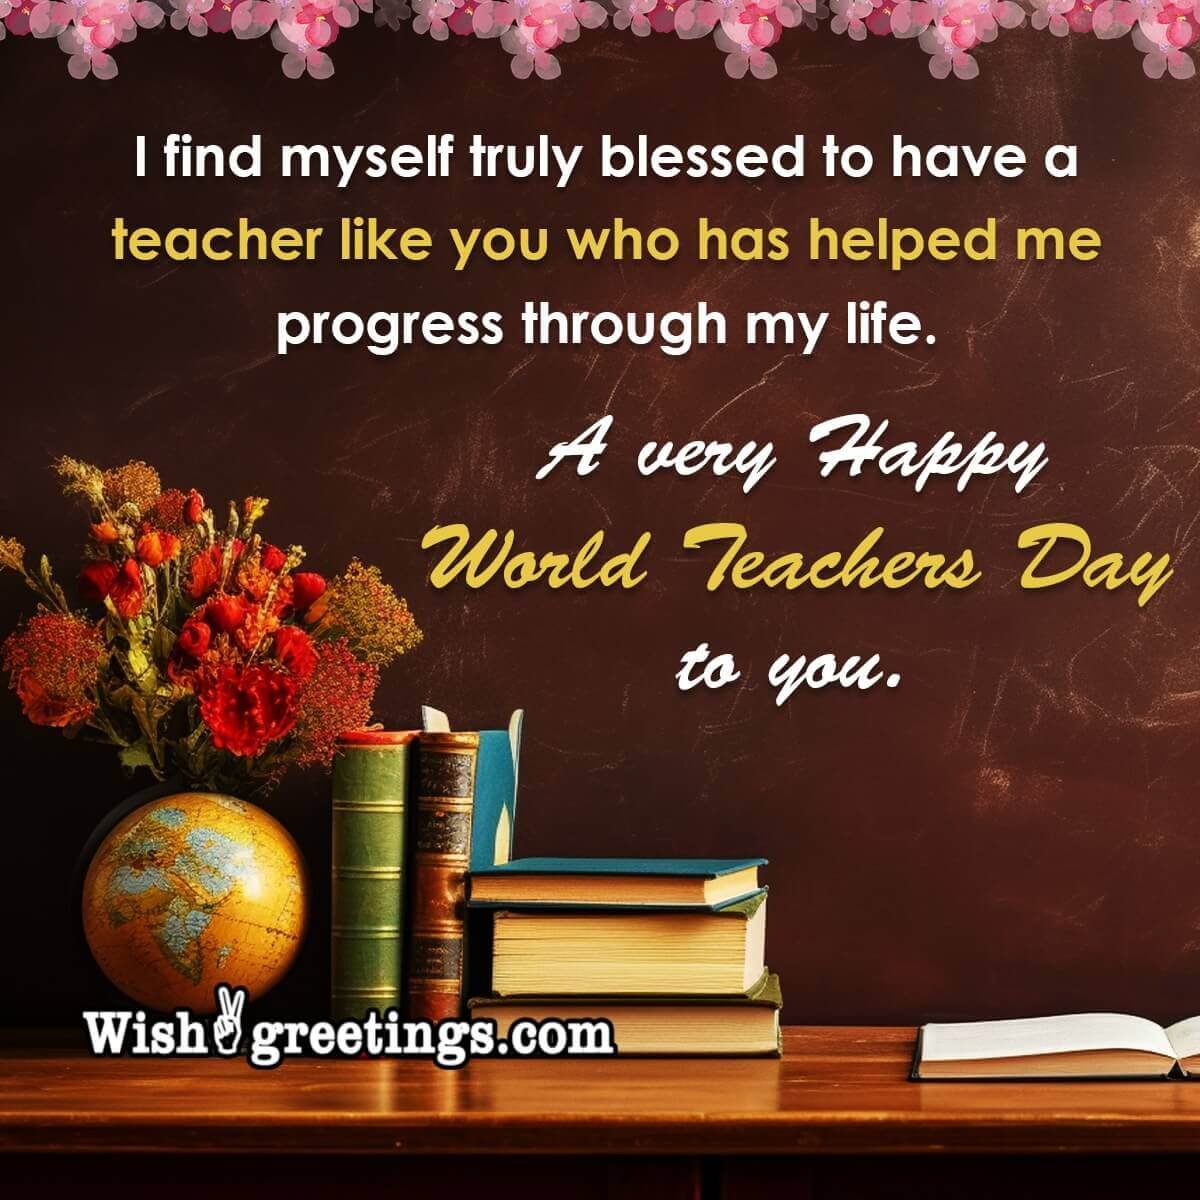 Happy World Teachers Day Message Image